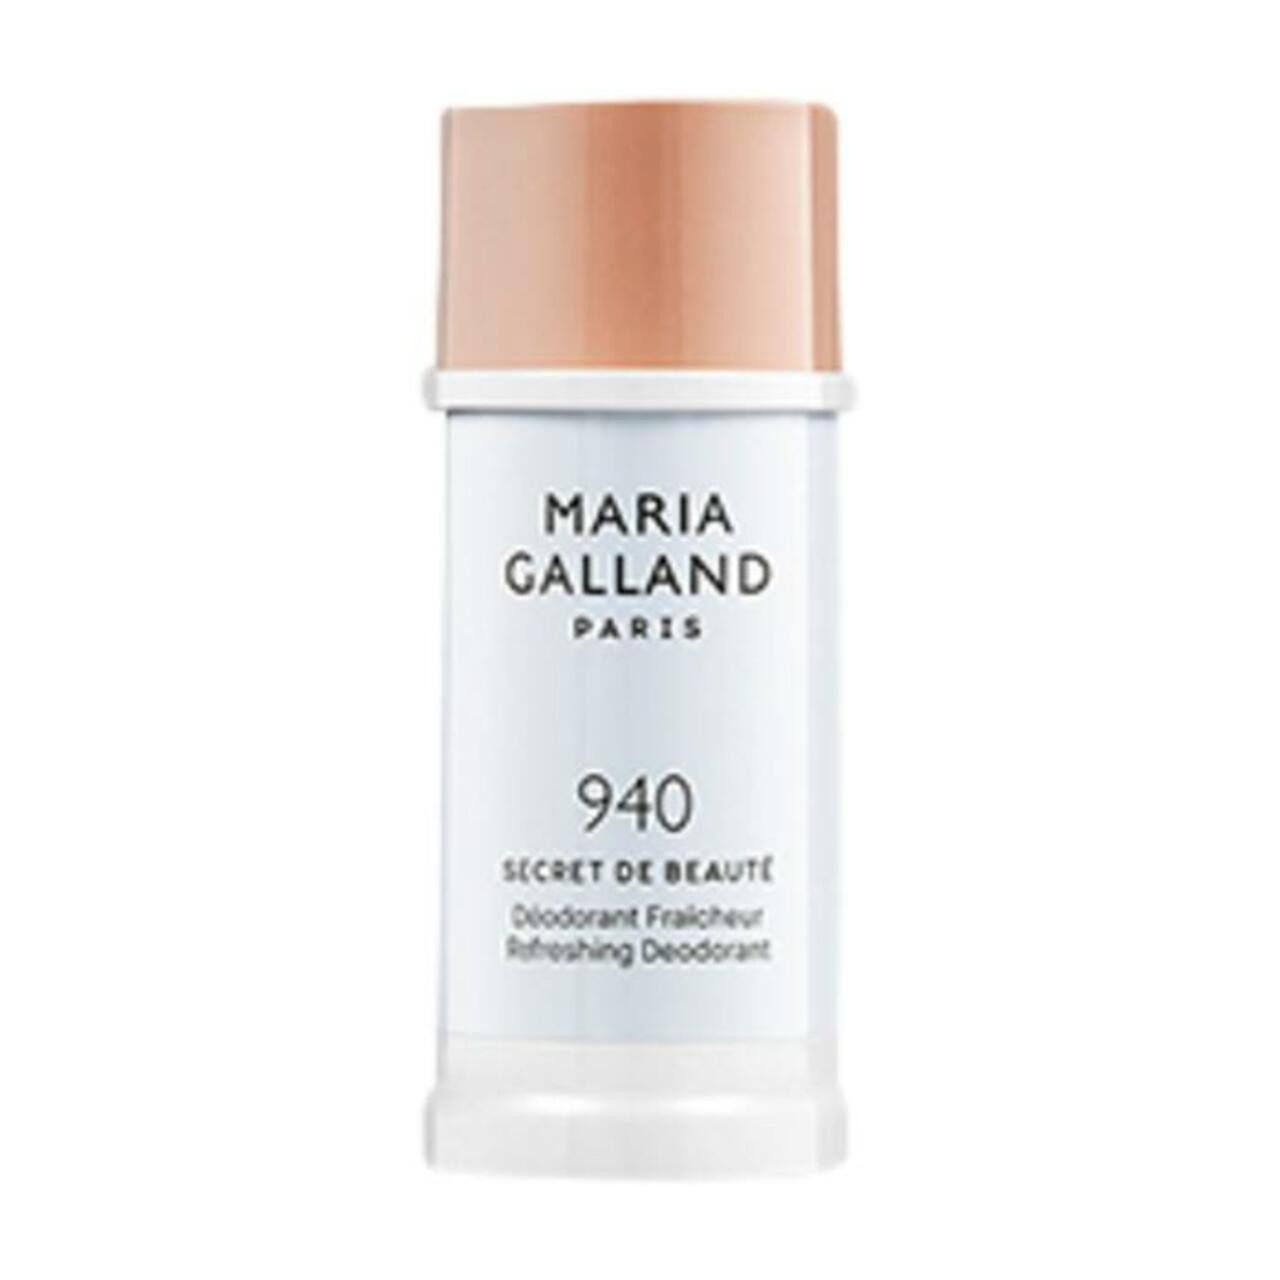 Maria Galland Paris Deo-Spray 940-Déodorant Fraîcheur